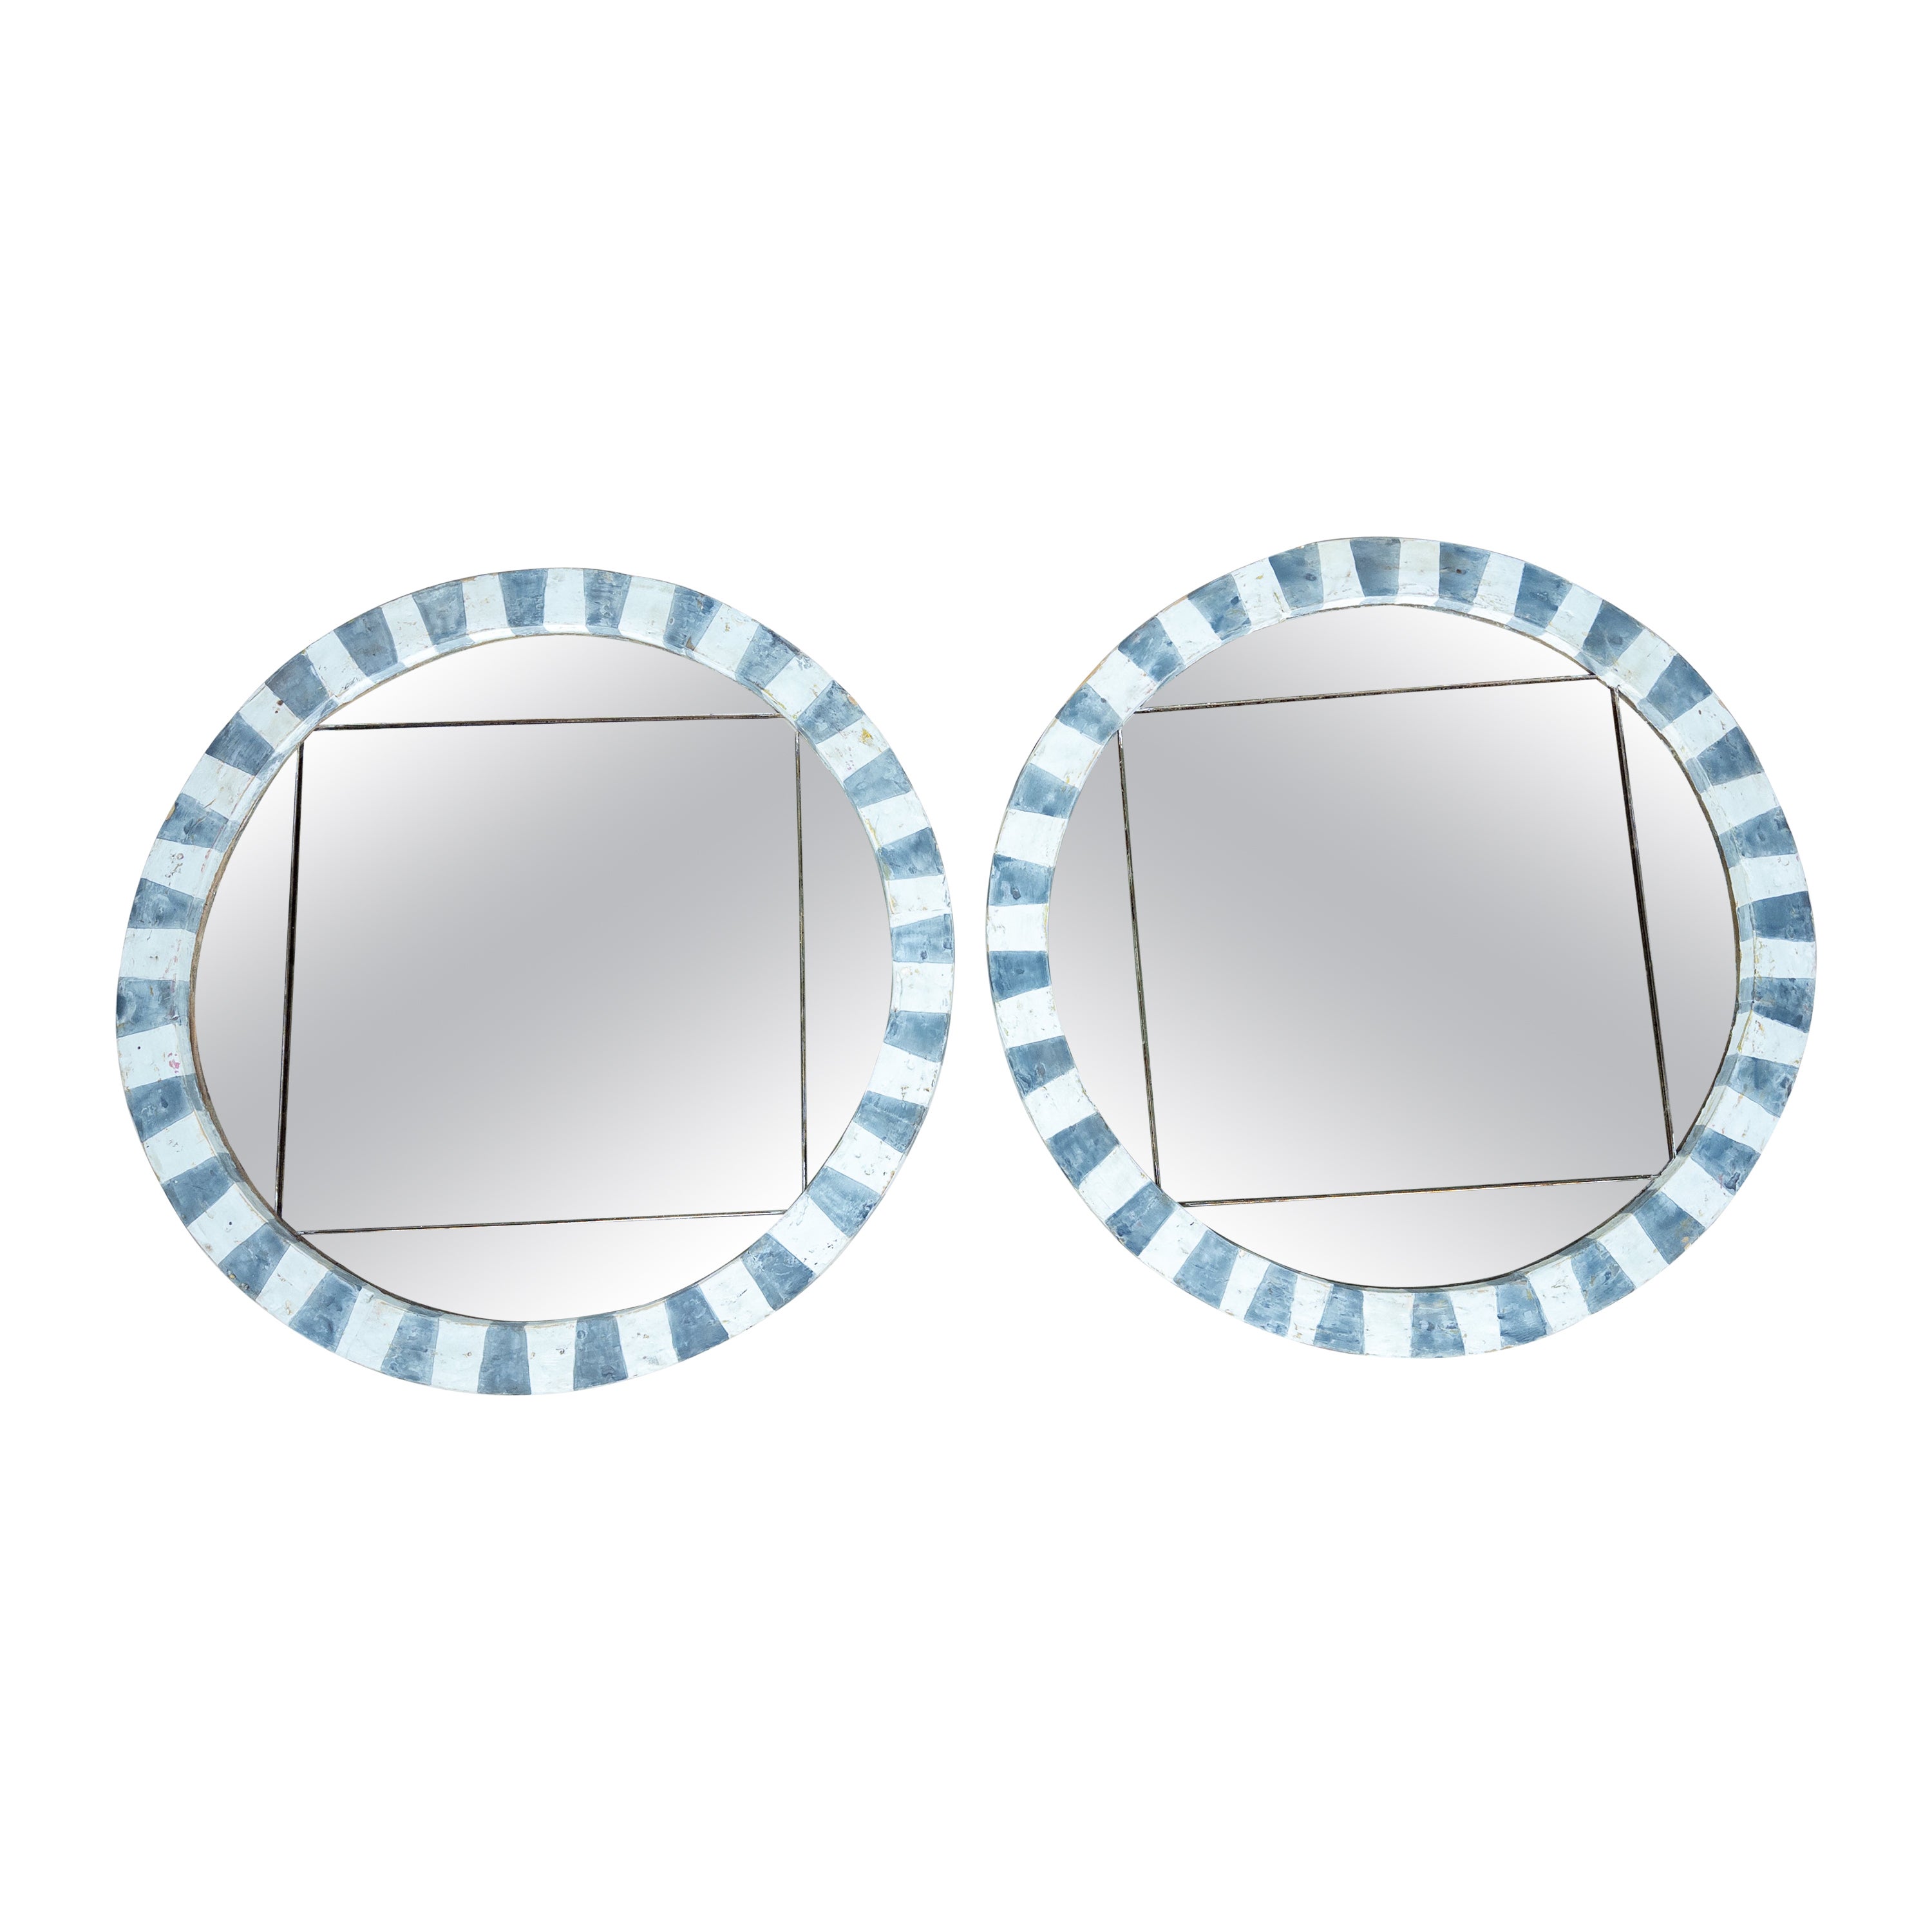 Pair of Early 20th Century Italian Blue Mirrors